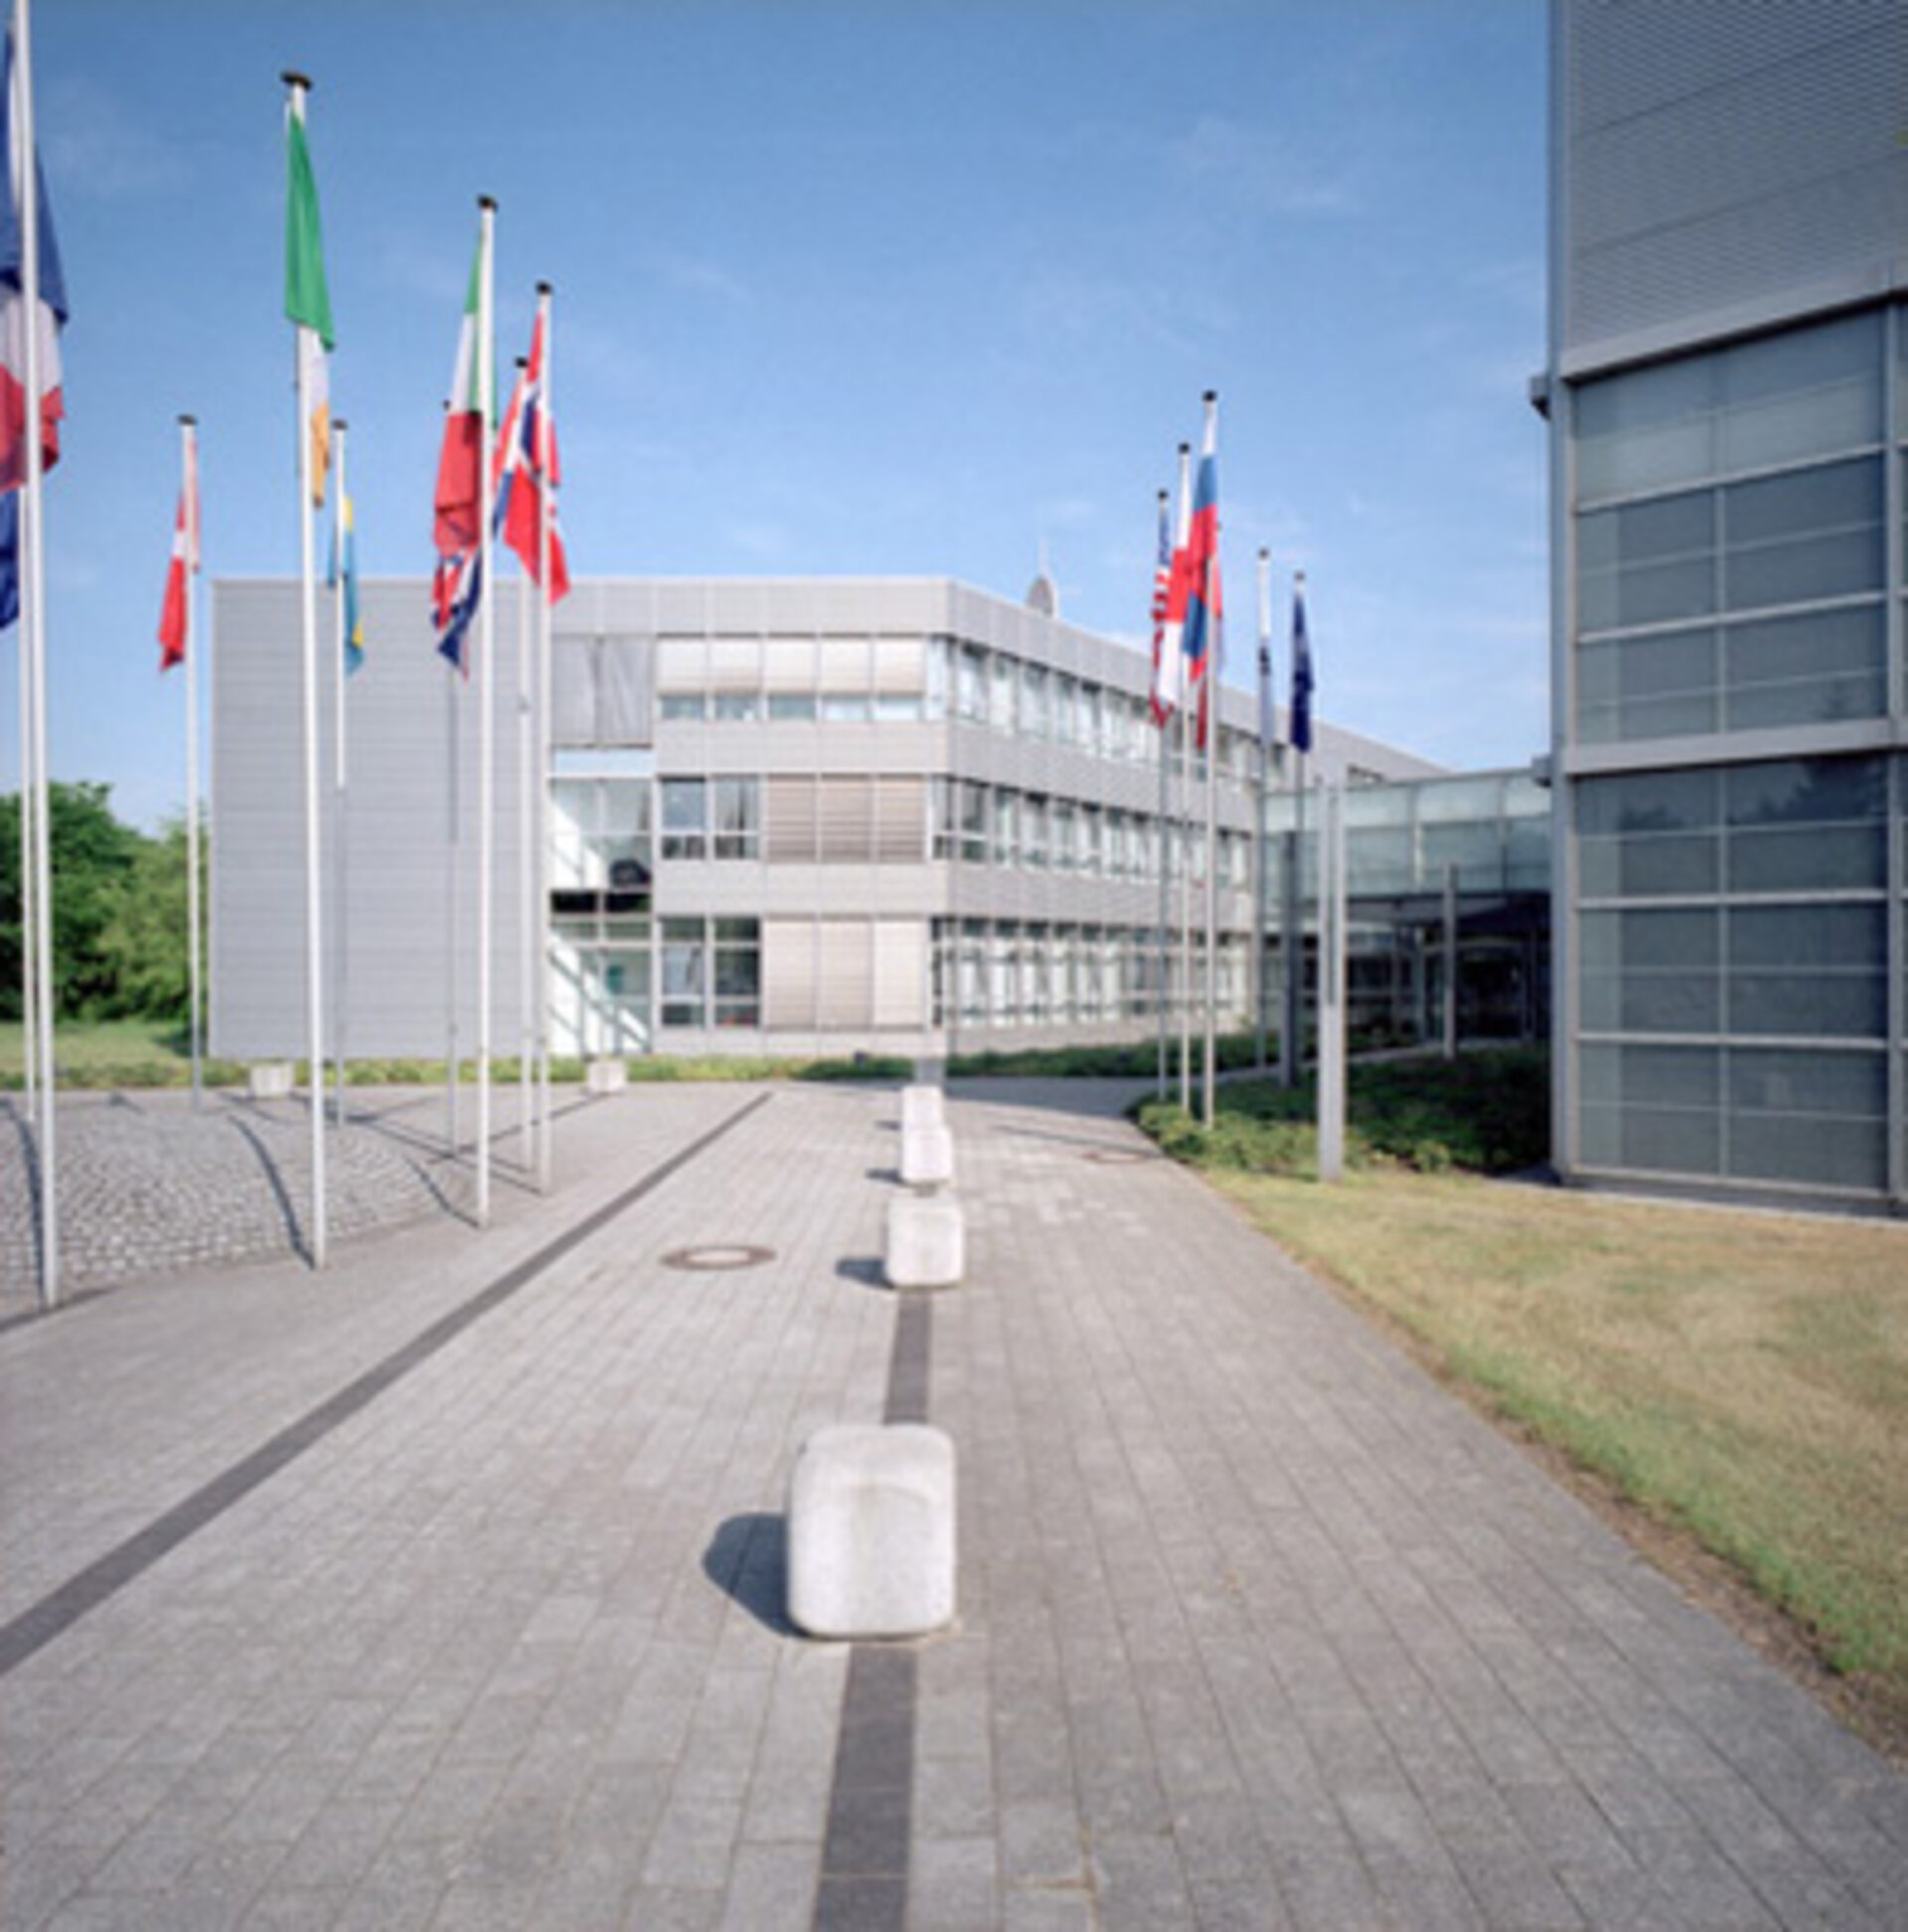 The European Astronaut Centre